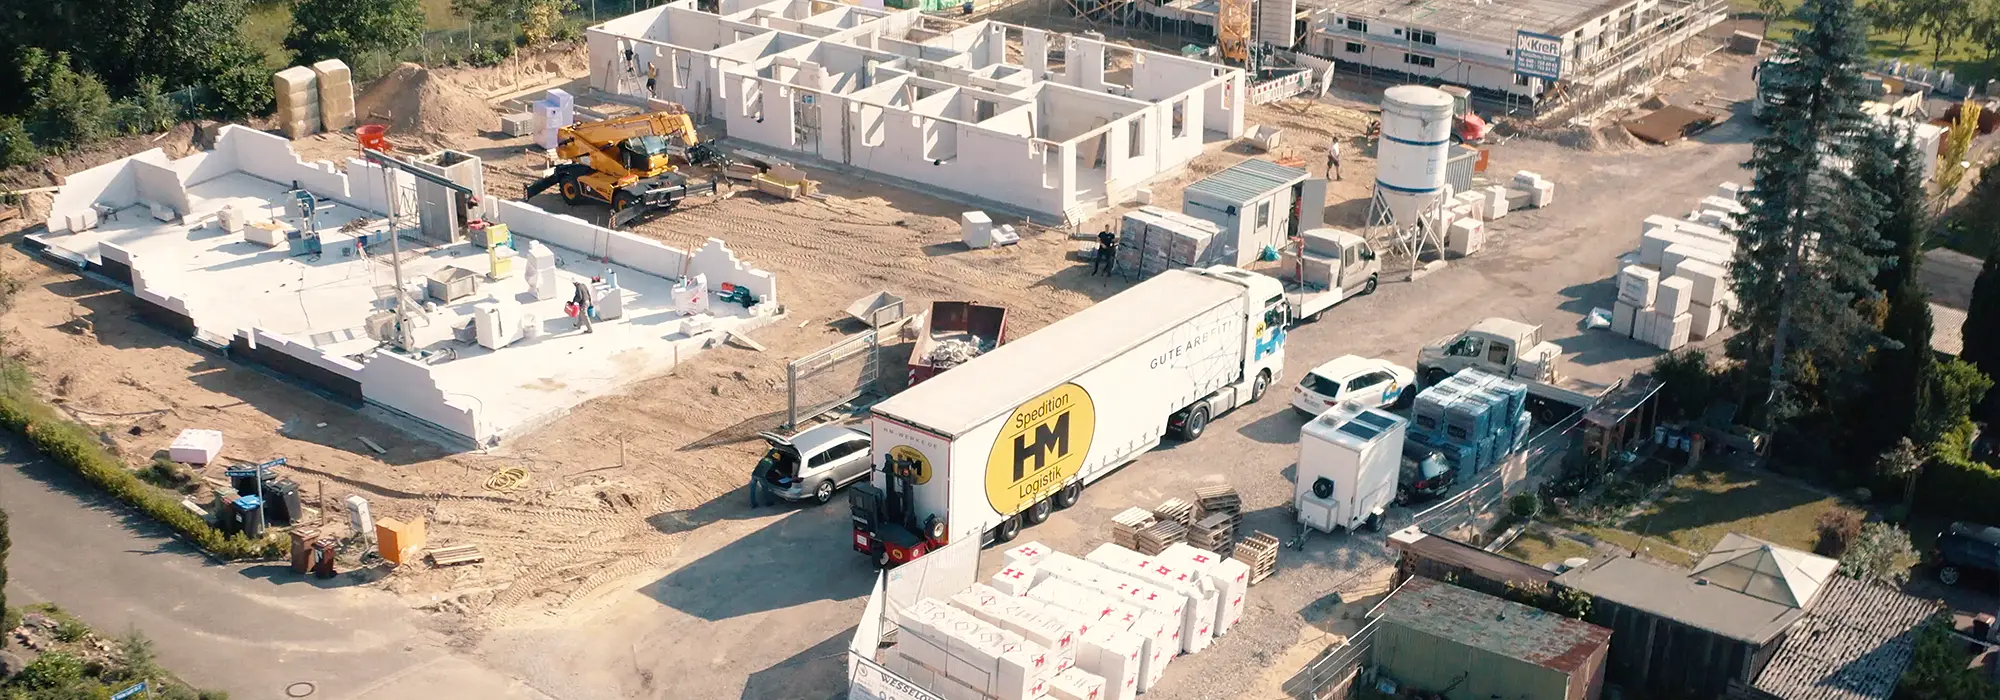 HM Spedition & Logistik: Bundesweite Baustellenlogistik